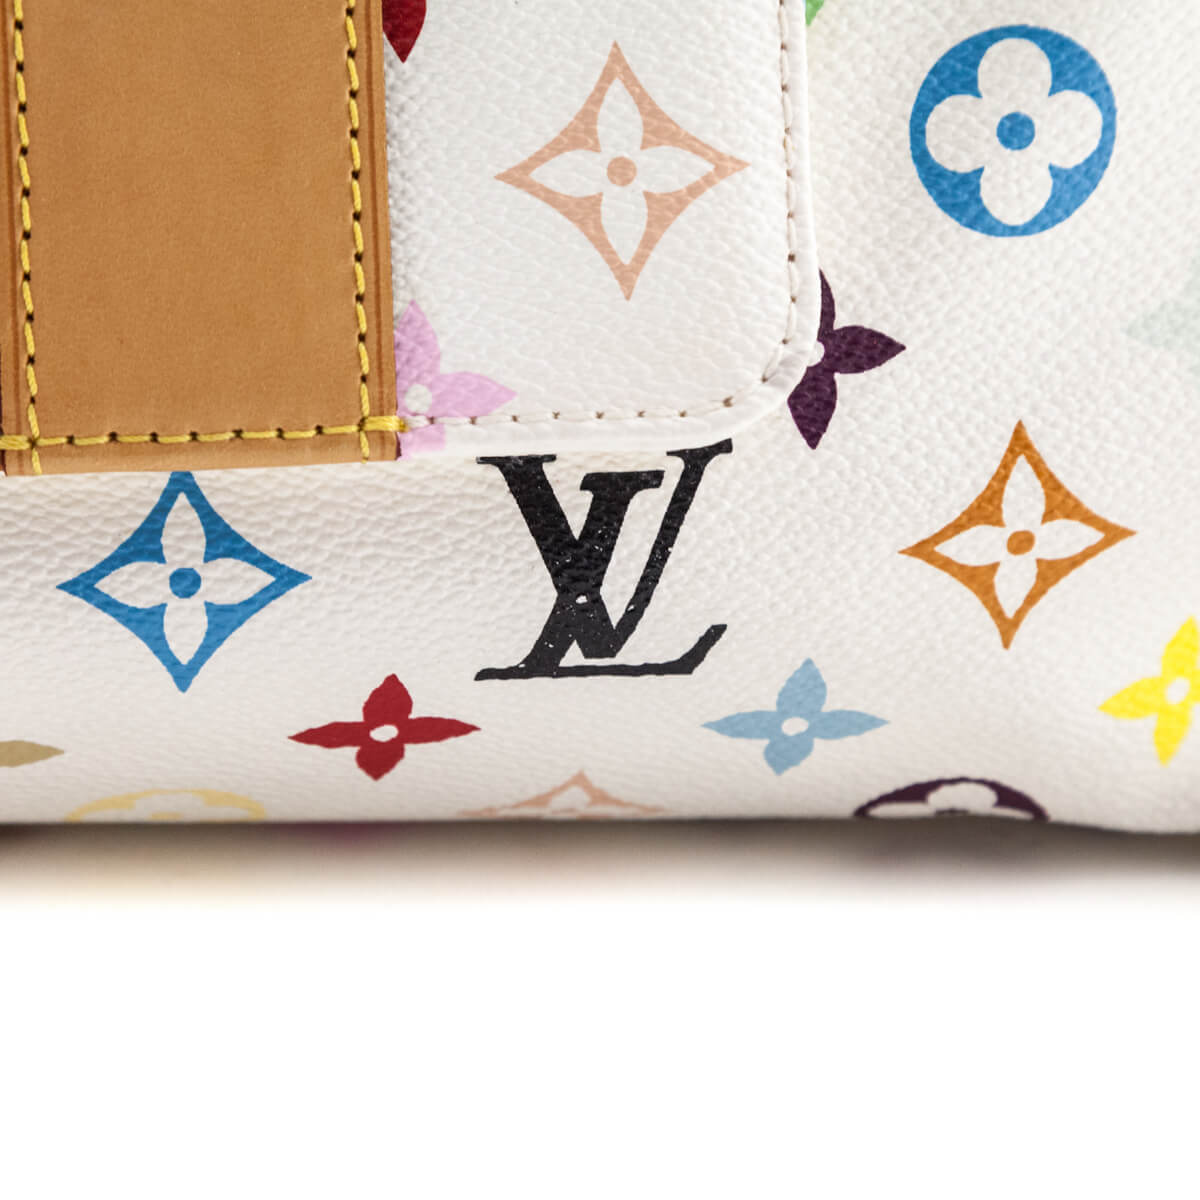 Louis Vuitton Multicolor Speedy 30 – THE M VNTG